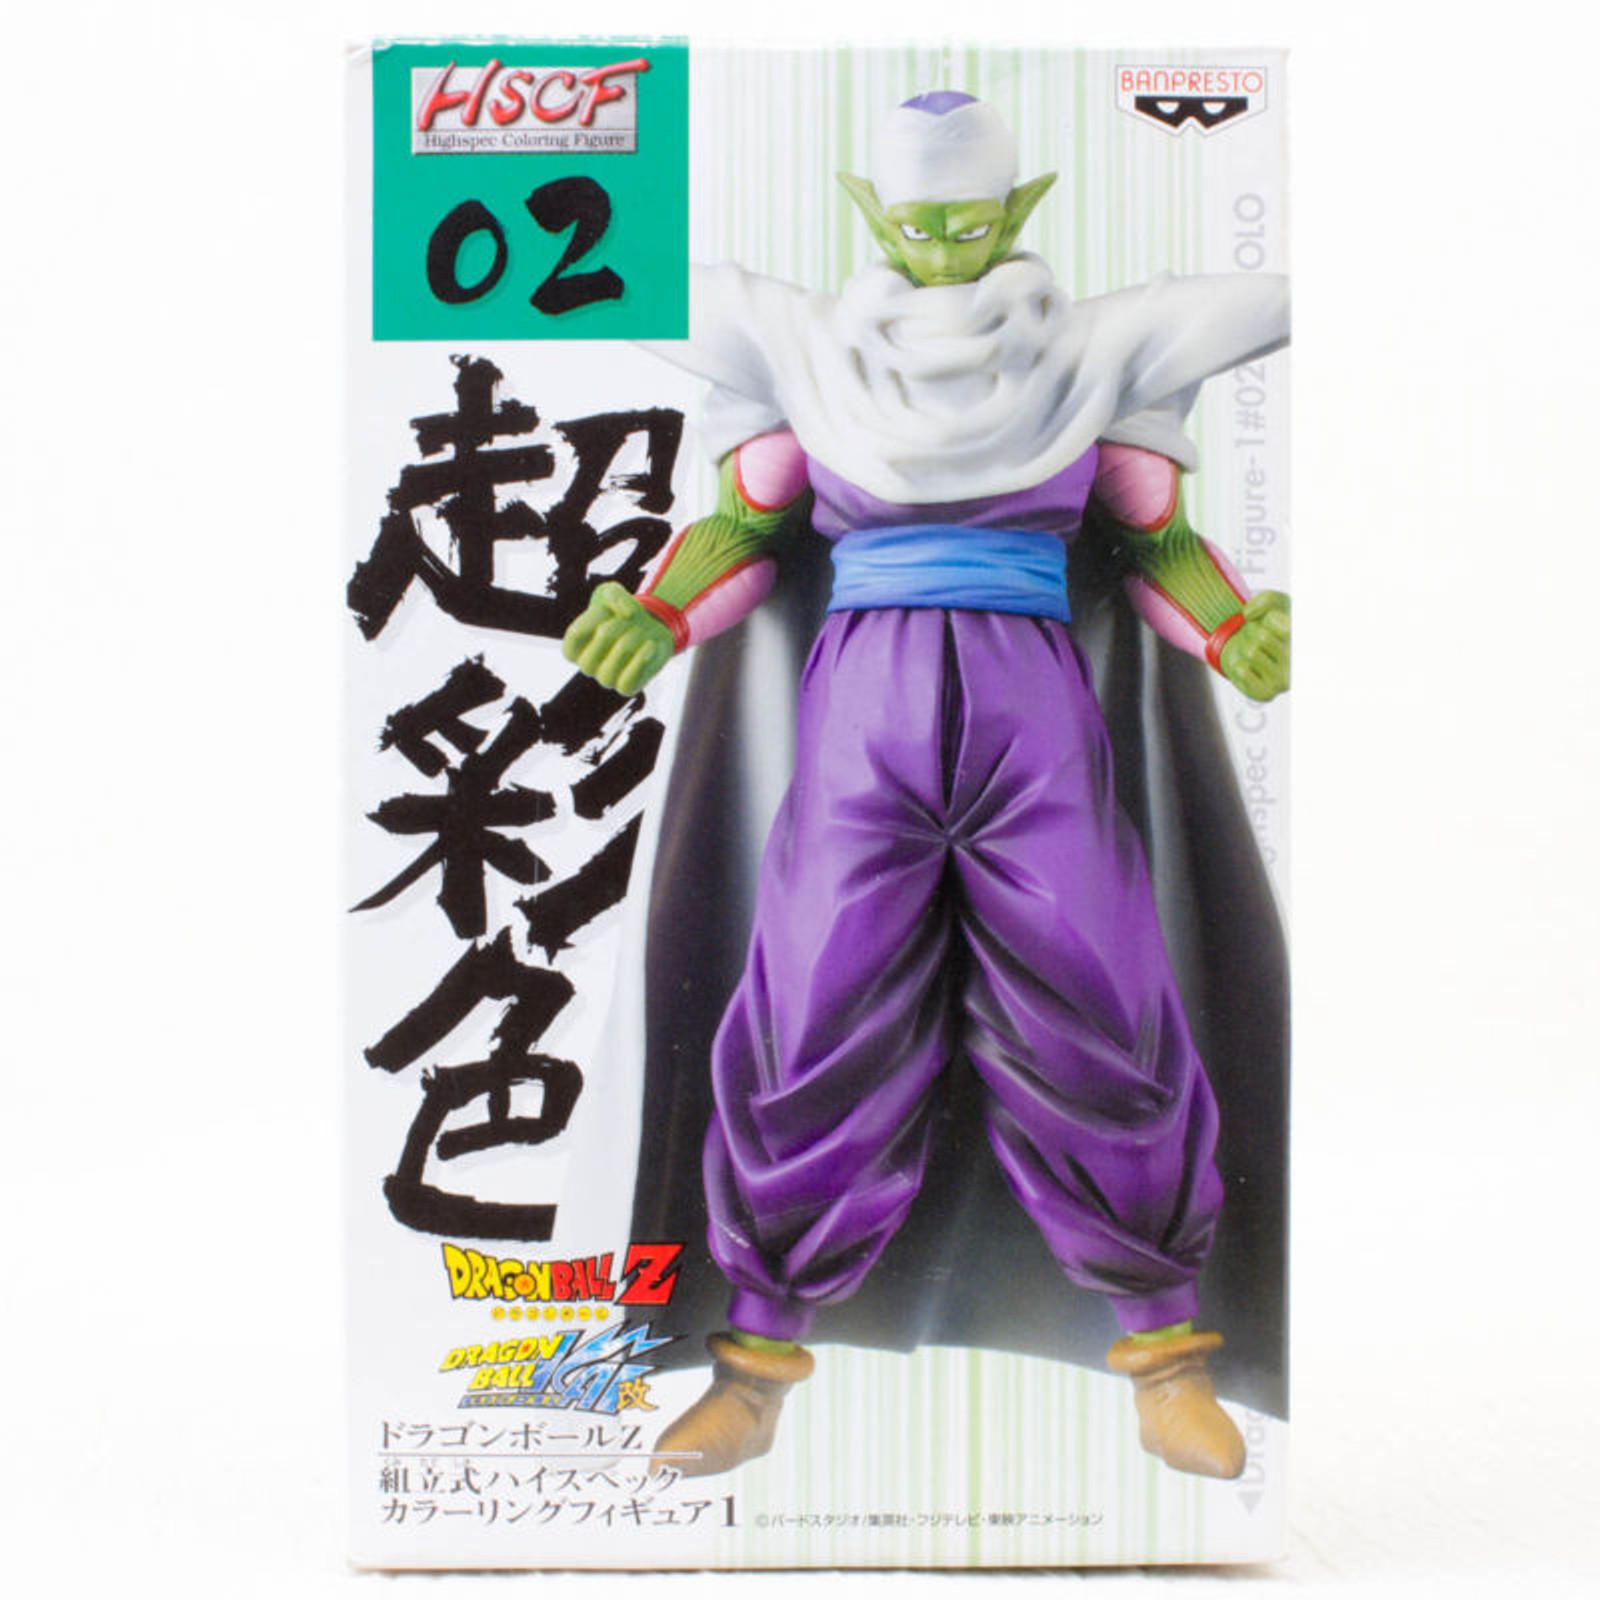 Dragon Ball Z Hscf Figure High Spec Coloring 02 Piccolo Japan Anime